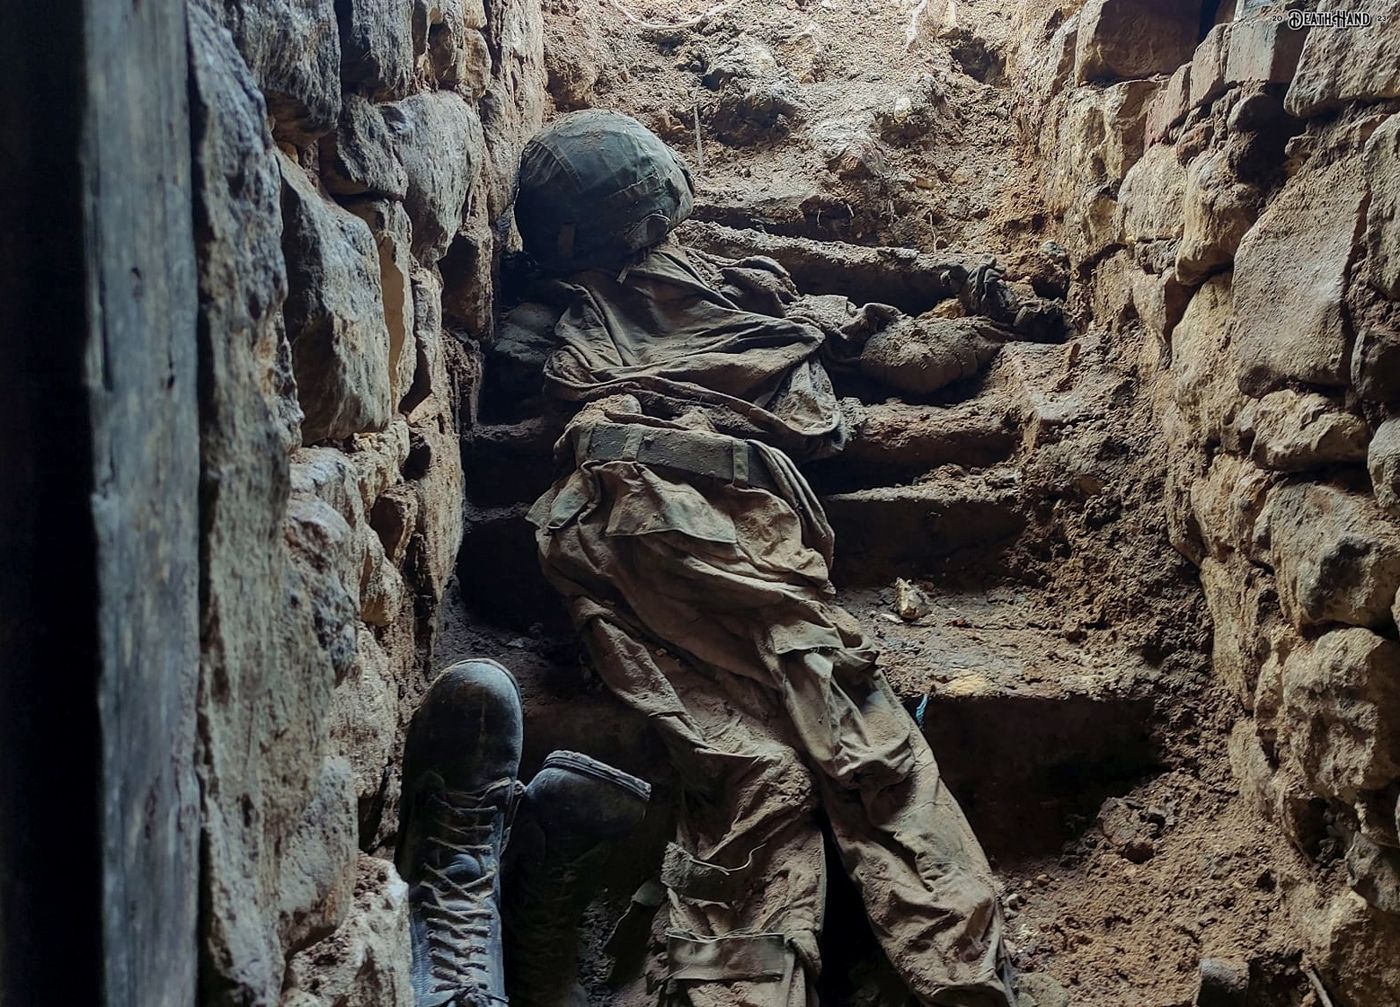 DH - Black Tulips find remove bodies 2 KIA RU soldiers from cellar one yr after died 3 - Krasn...jpg